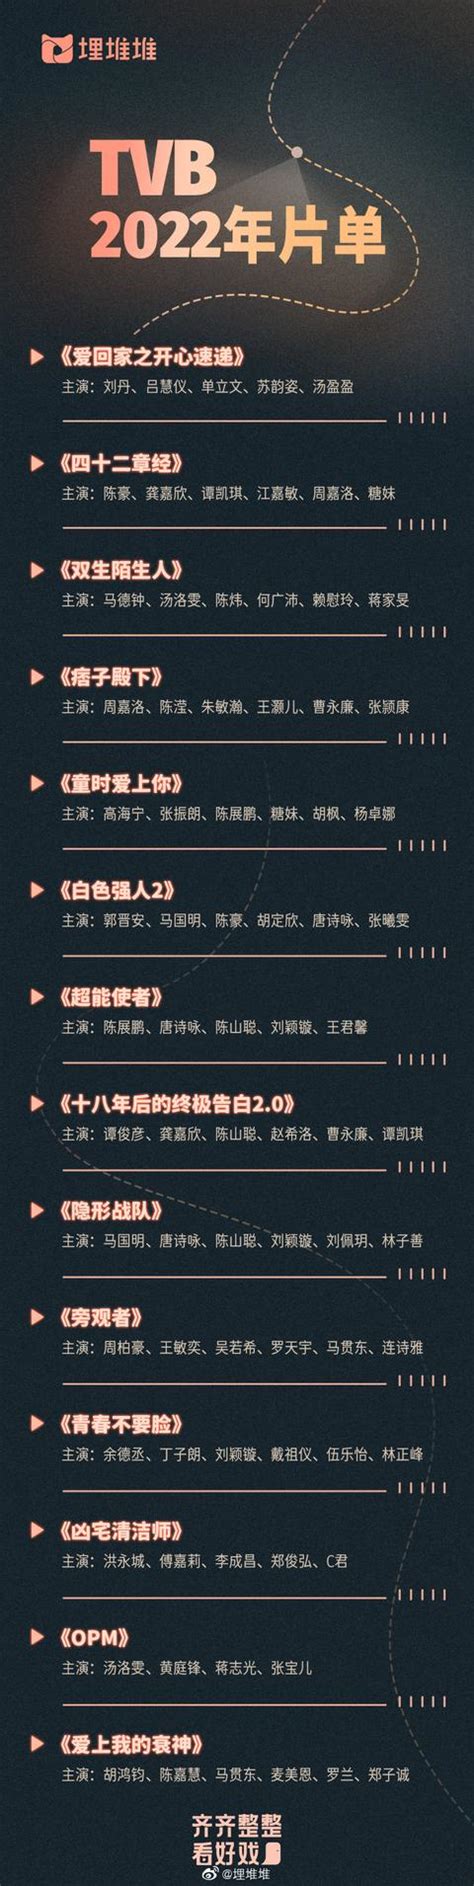 TVB2022年片单：发布13部新剧，综艺瞄准大湾区市场_腾讯新闻